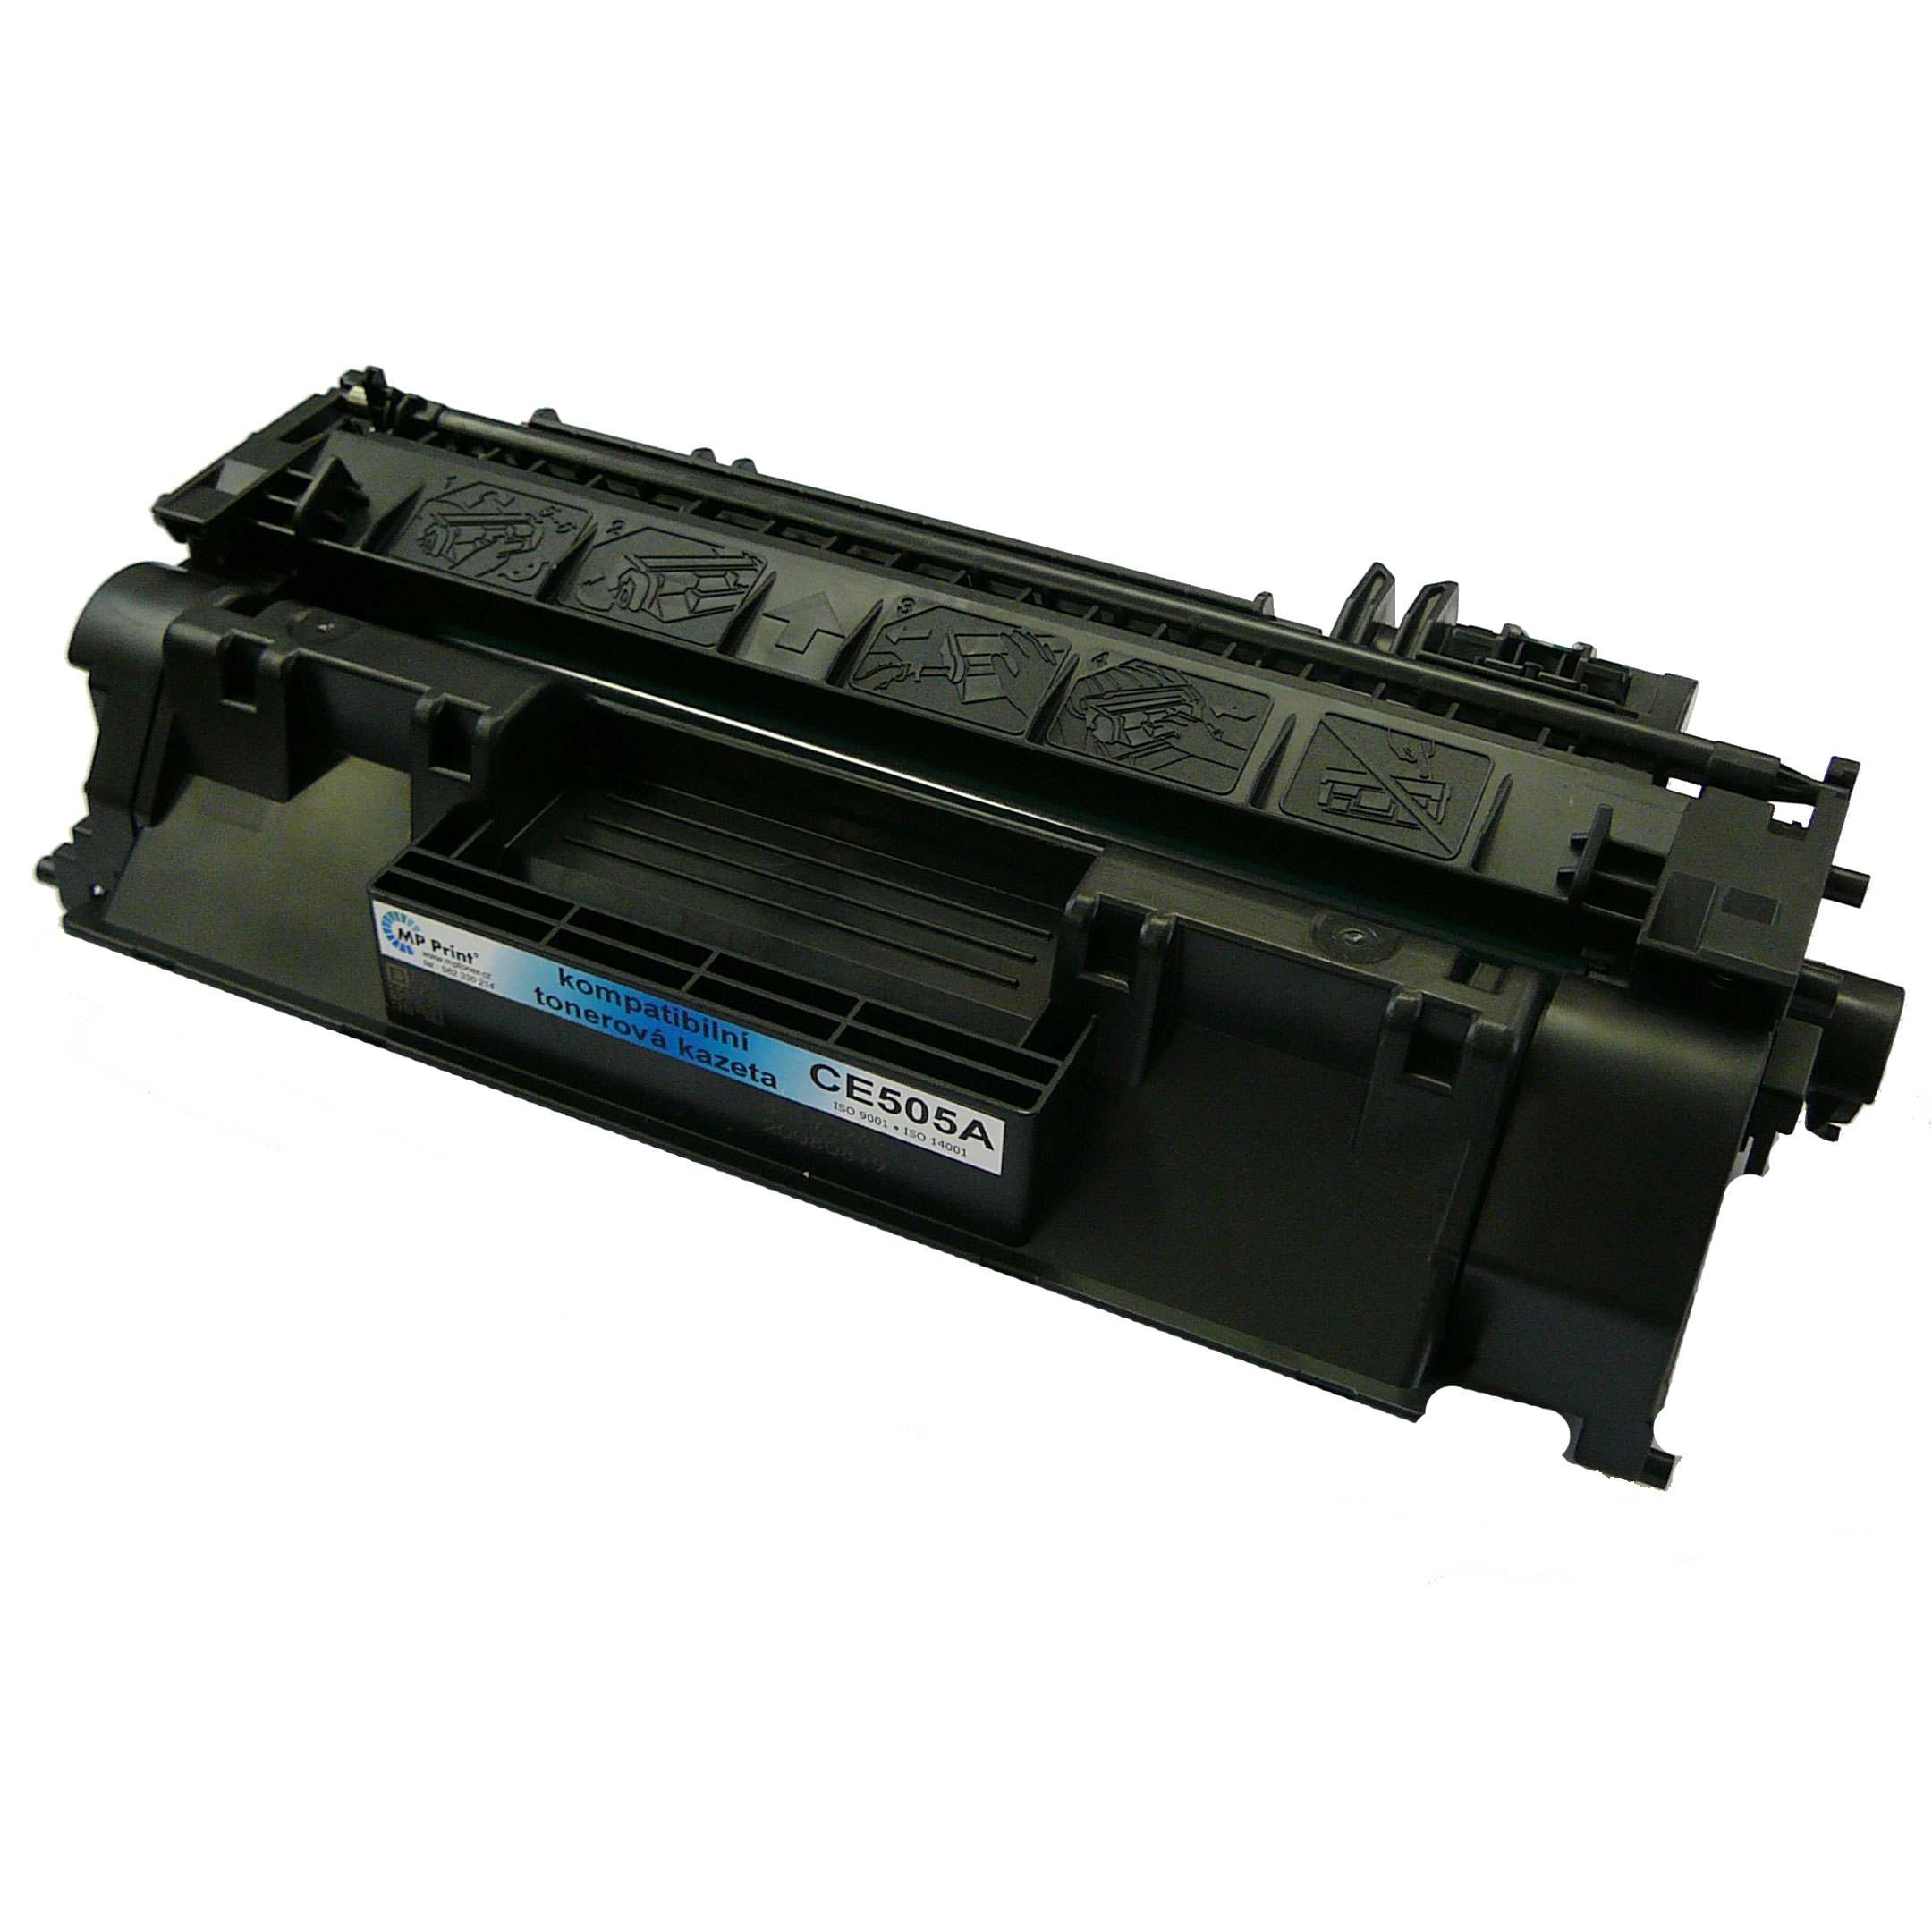 Kompatibilní toner HP CF280X, LaserJet Pro 400 M401, M425, black, 80X, MP print